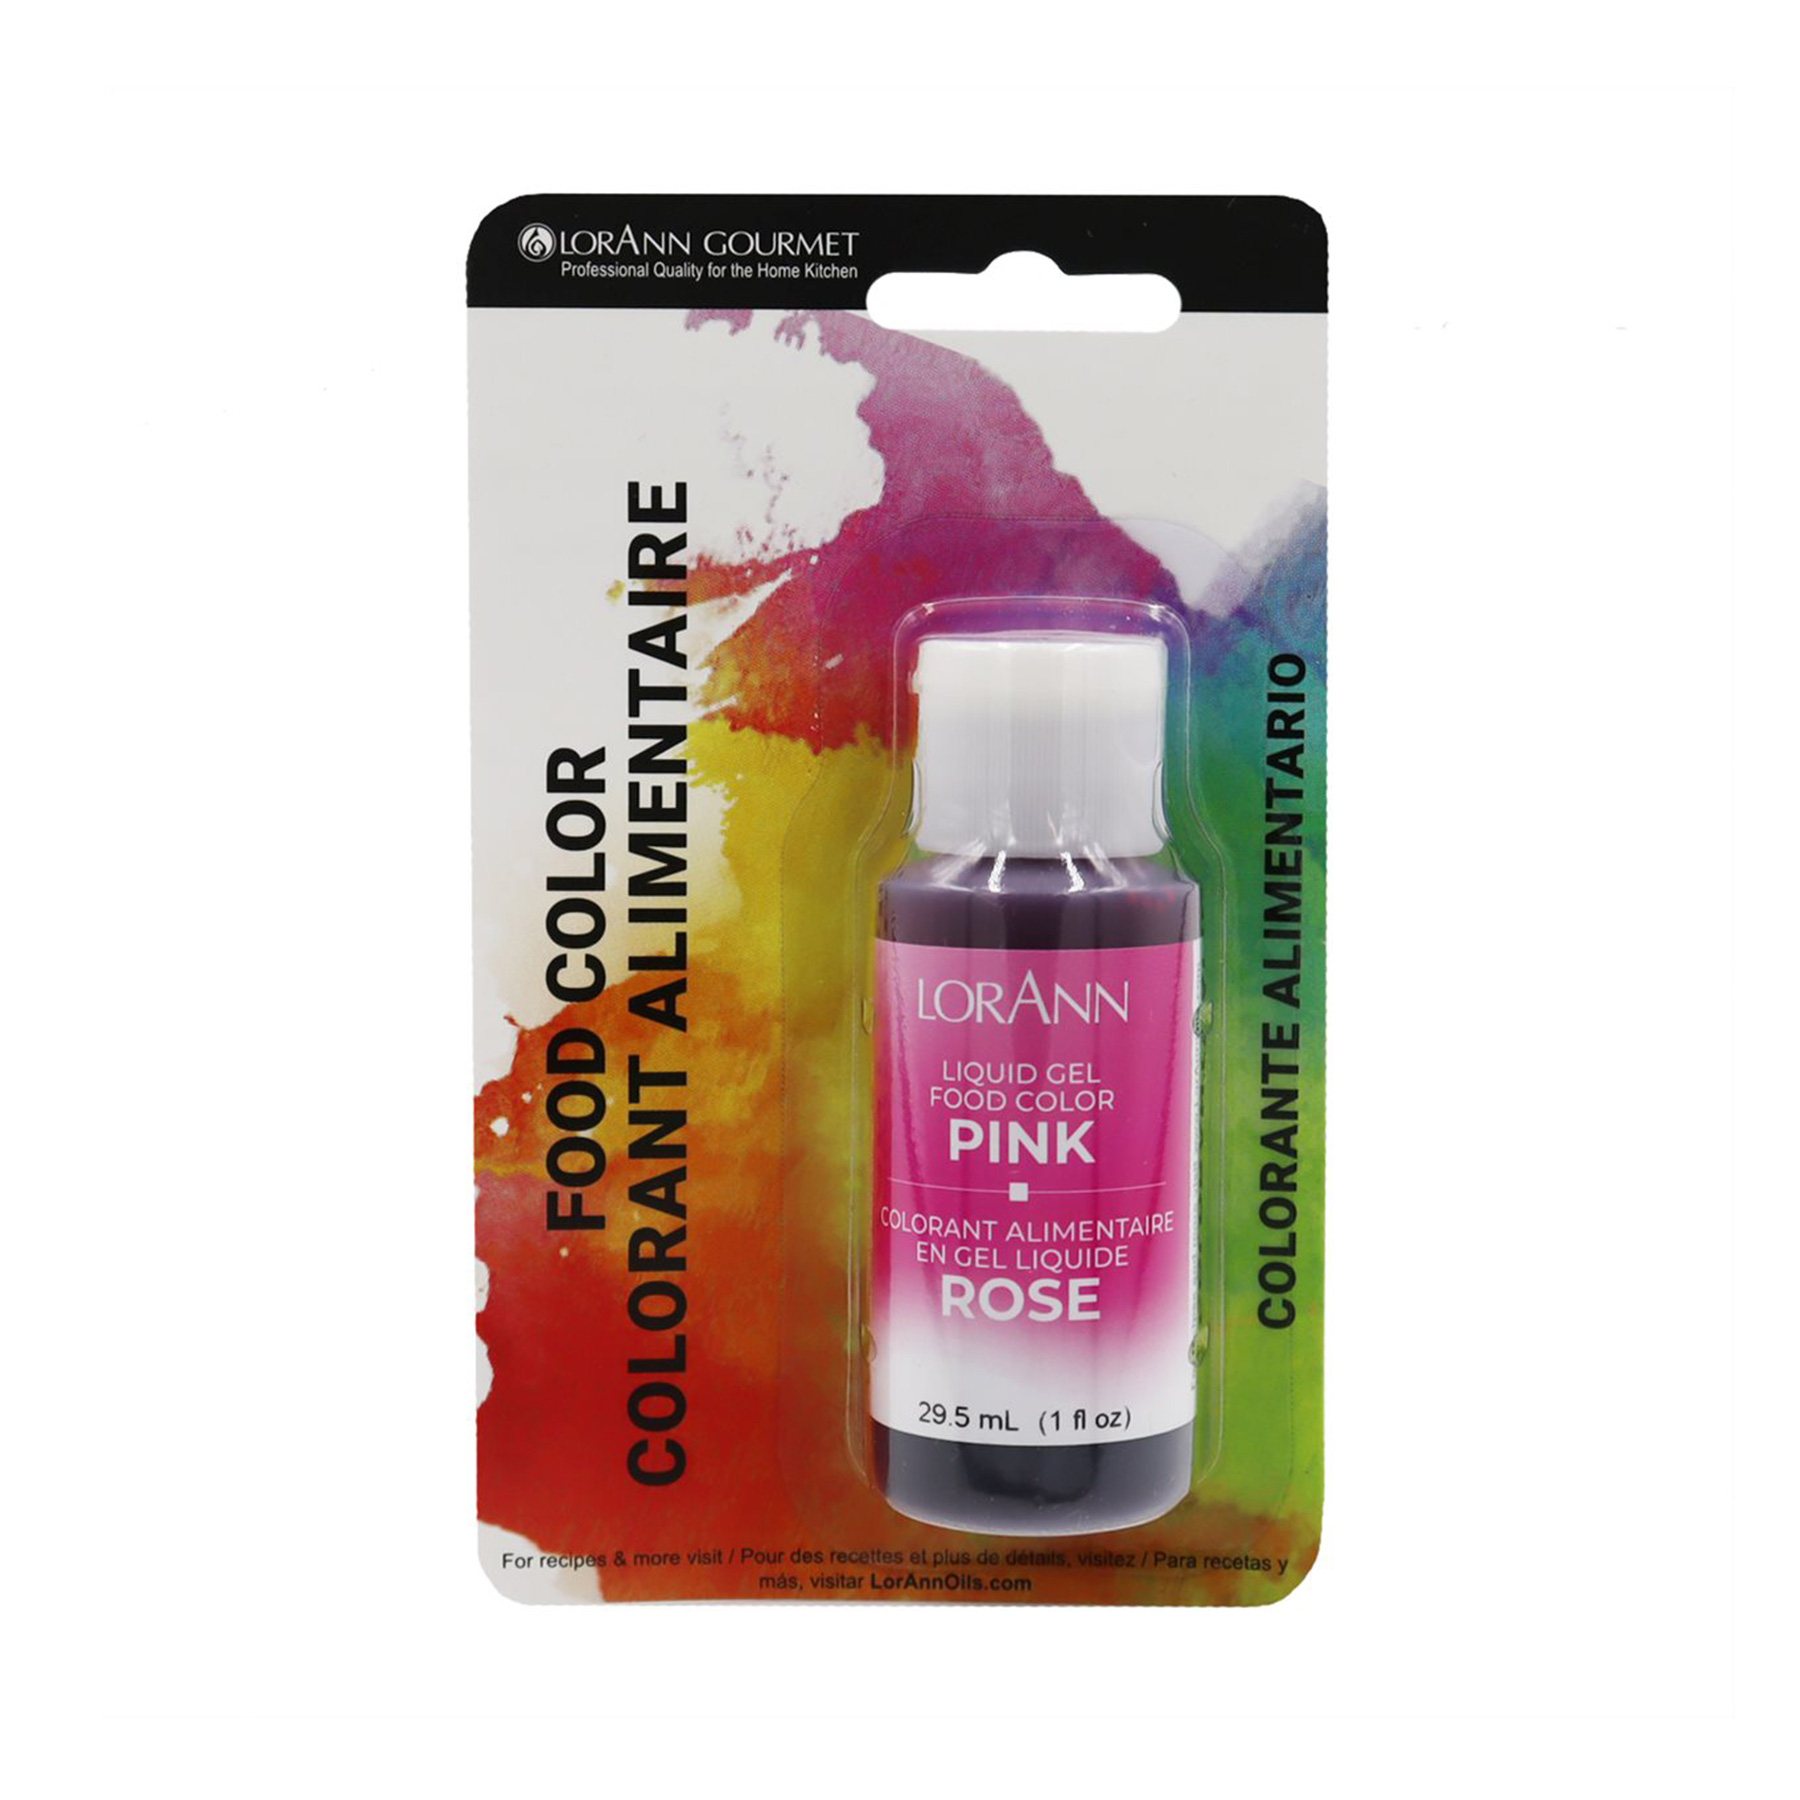 lorann-pink-liquid-gel-food-colour-1oz-packaging